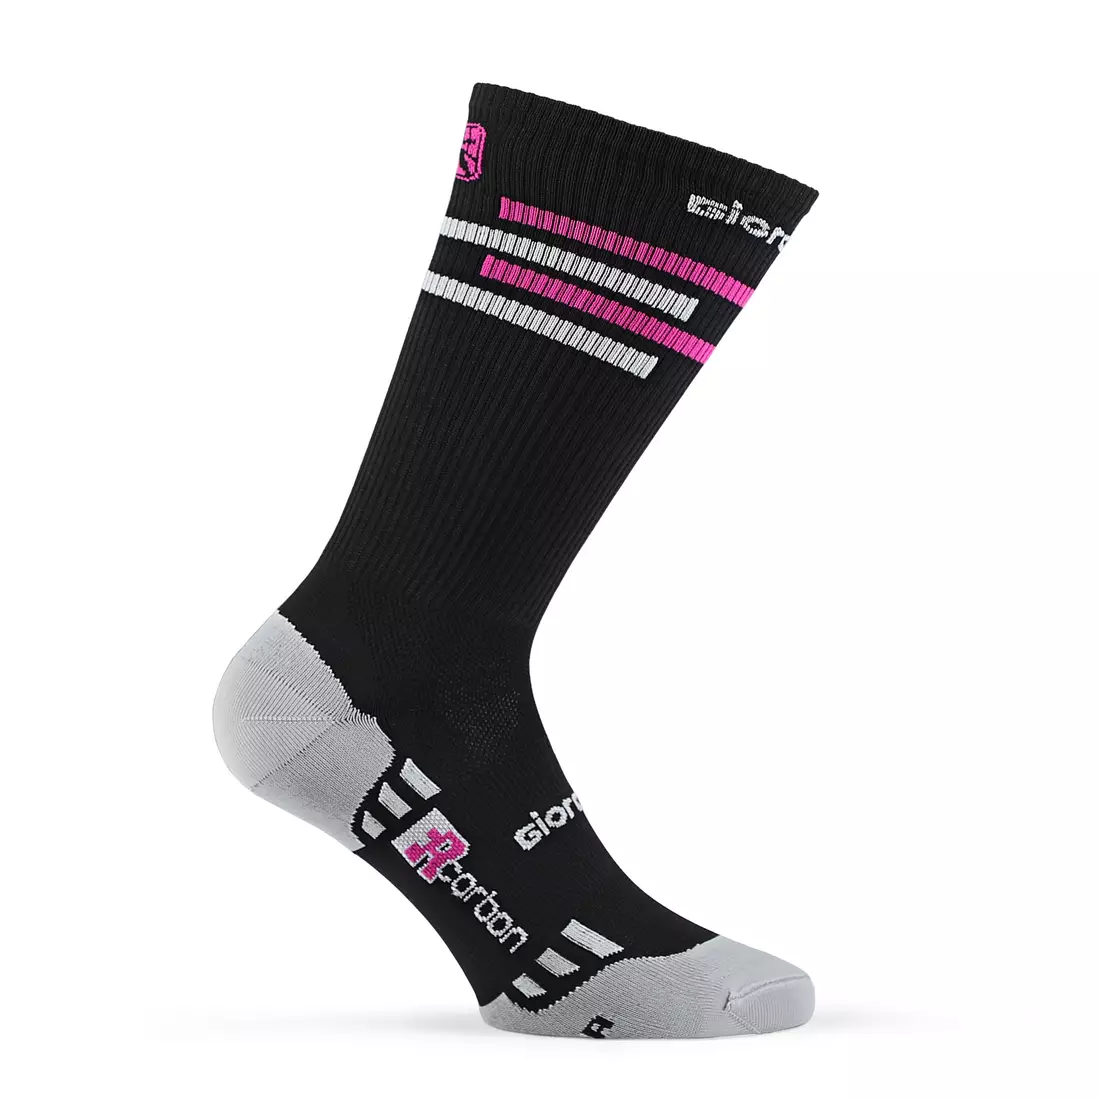 GIORDANA LINES black and pink cycling socks